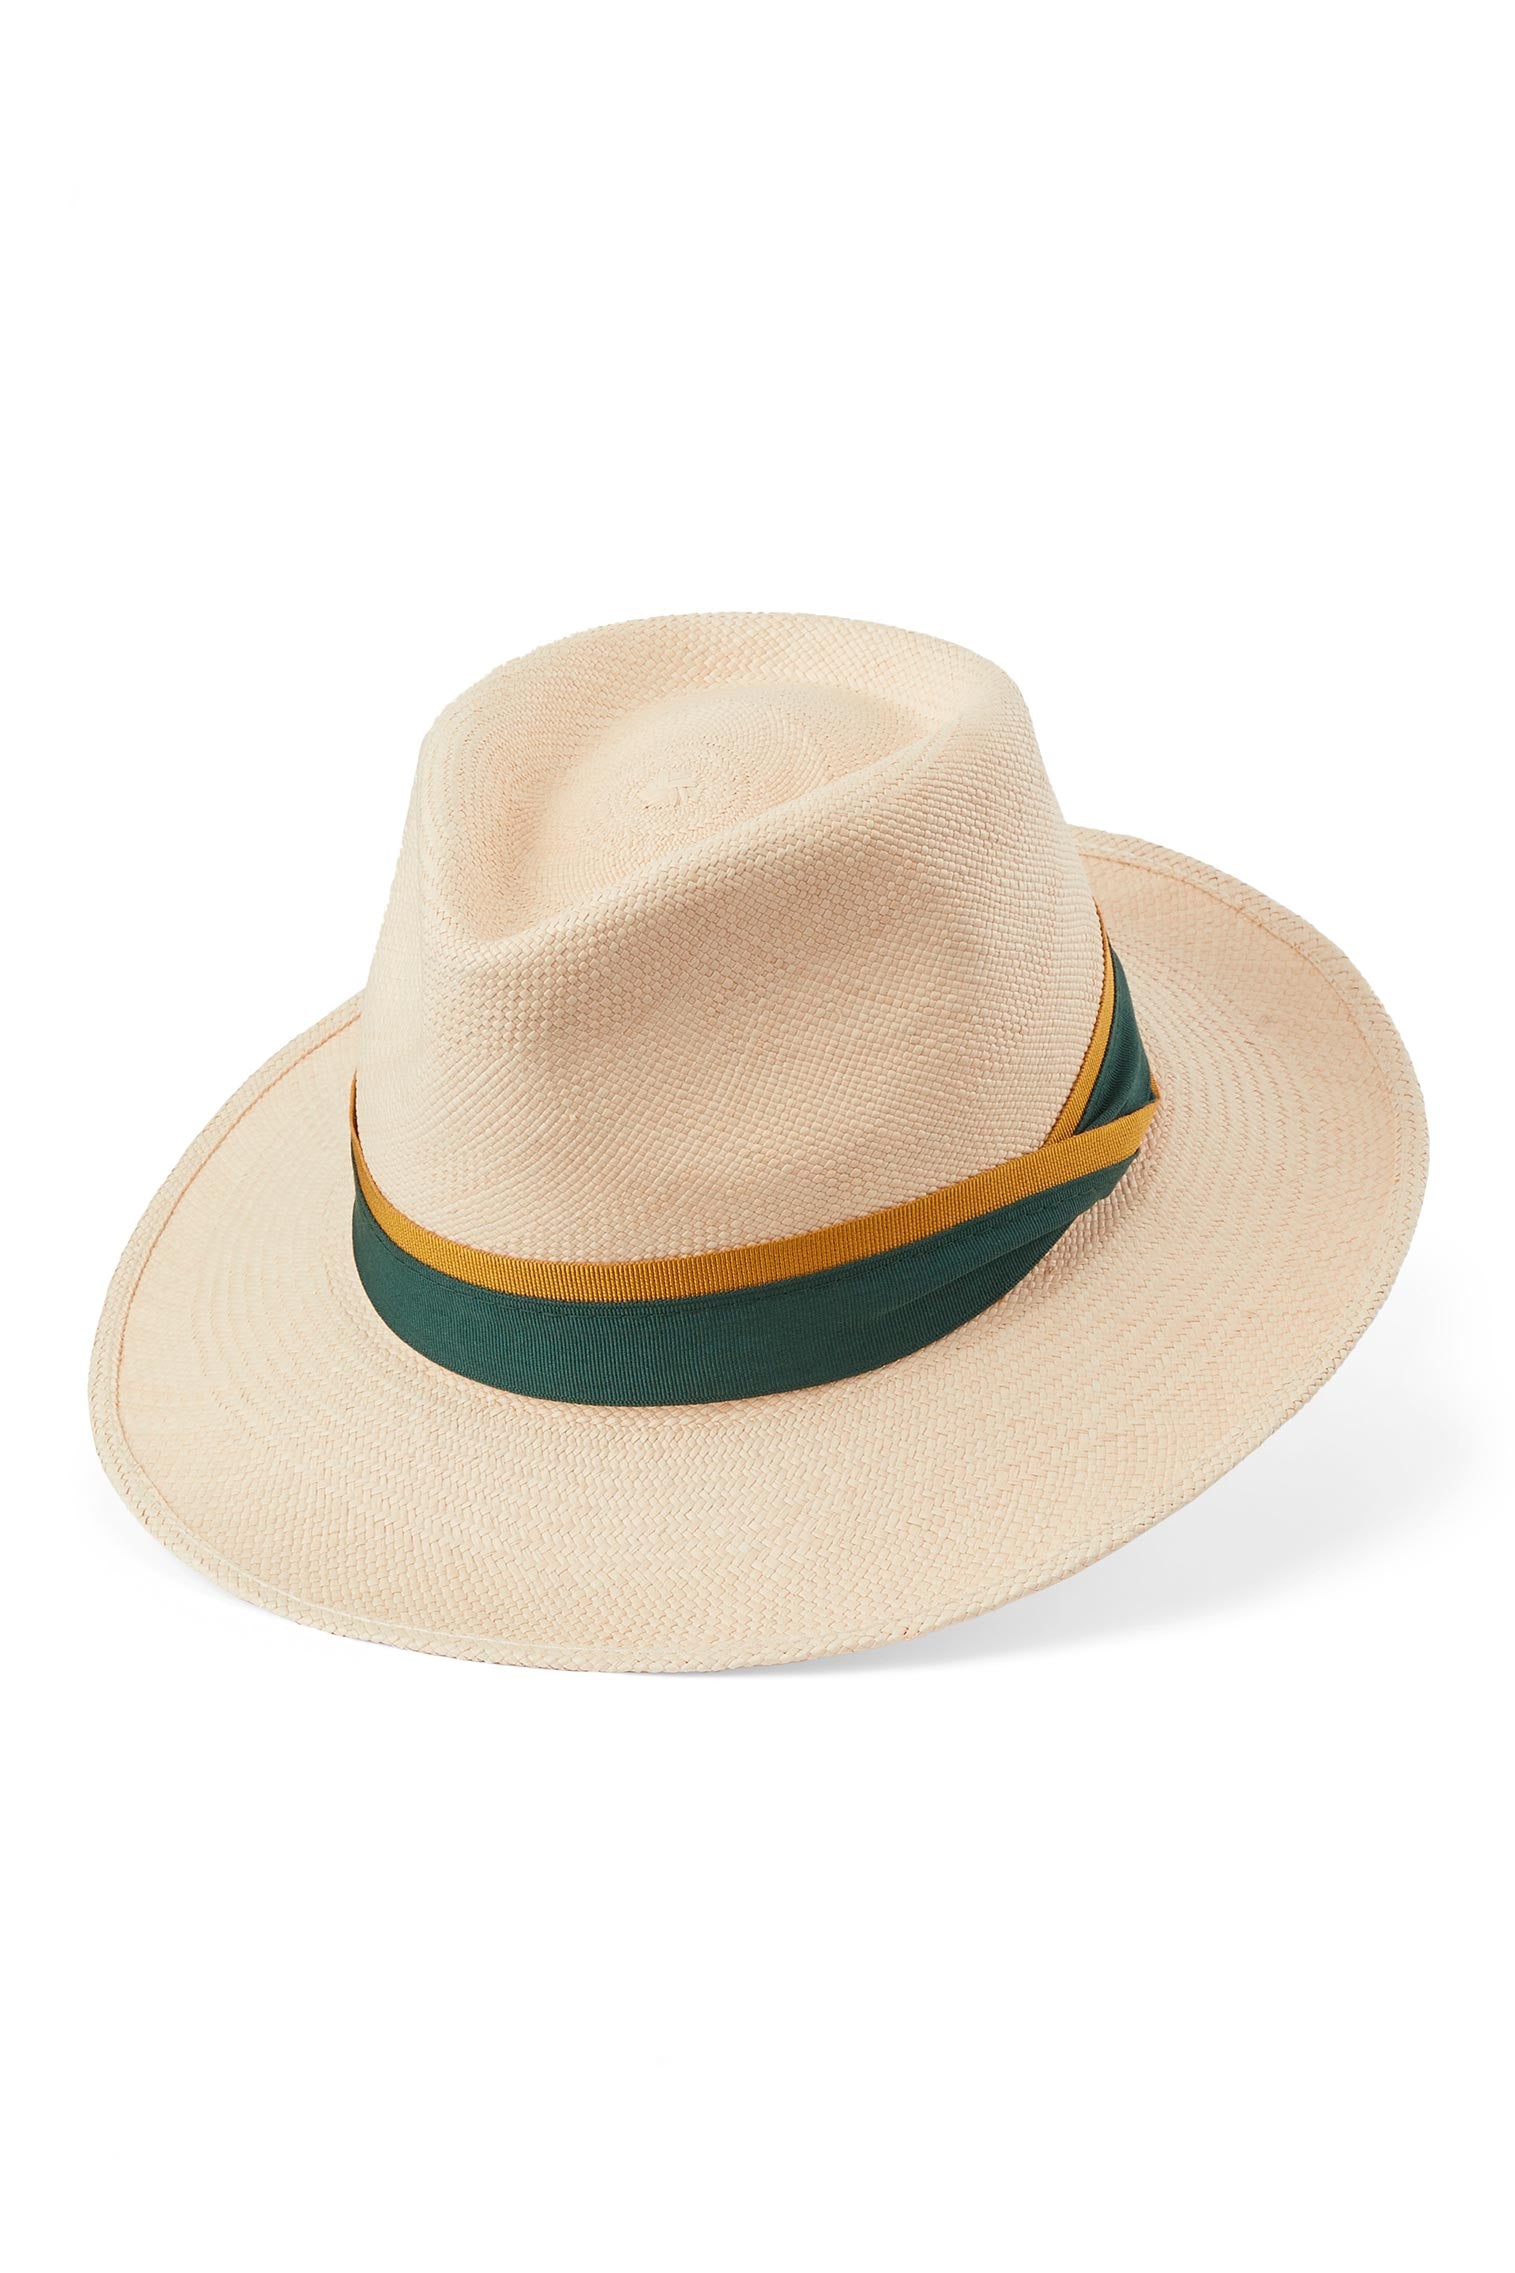 Highgrove Panama - New Season Men's Hats - Lock & Co. Hatters London UK